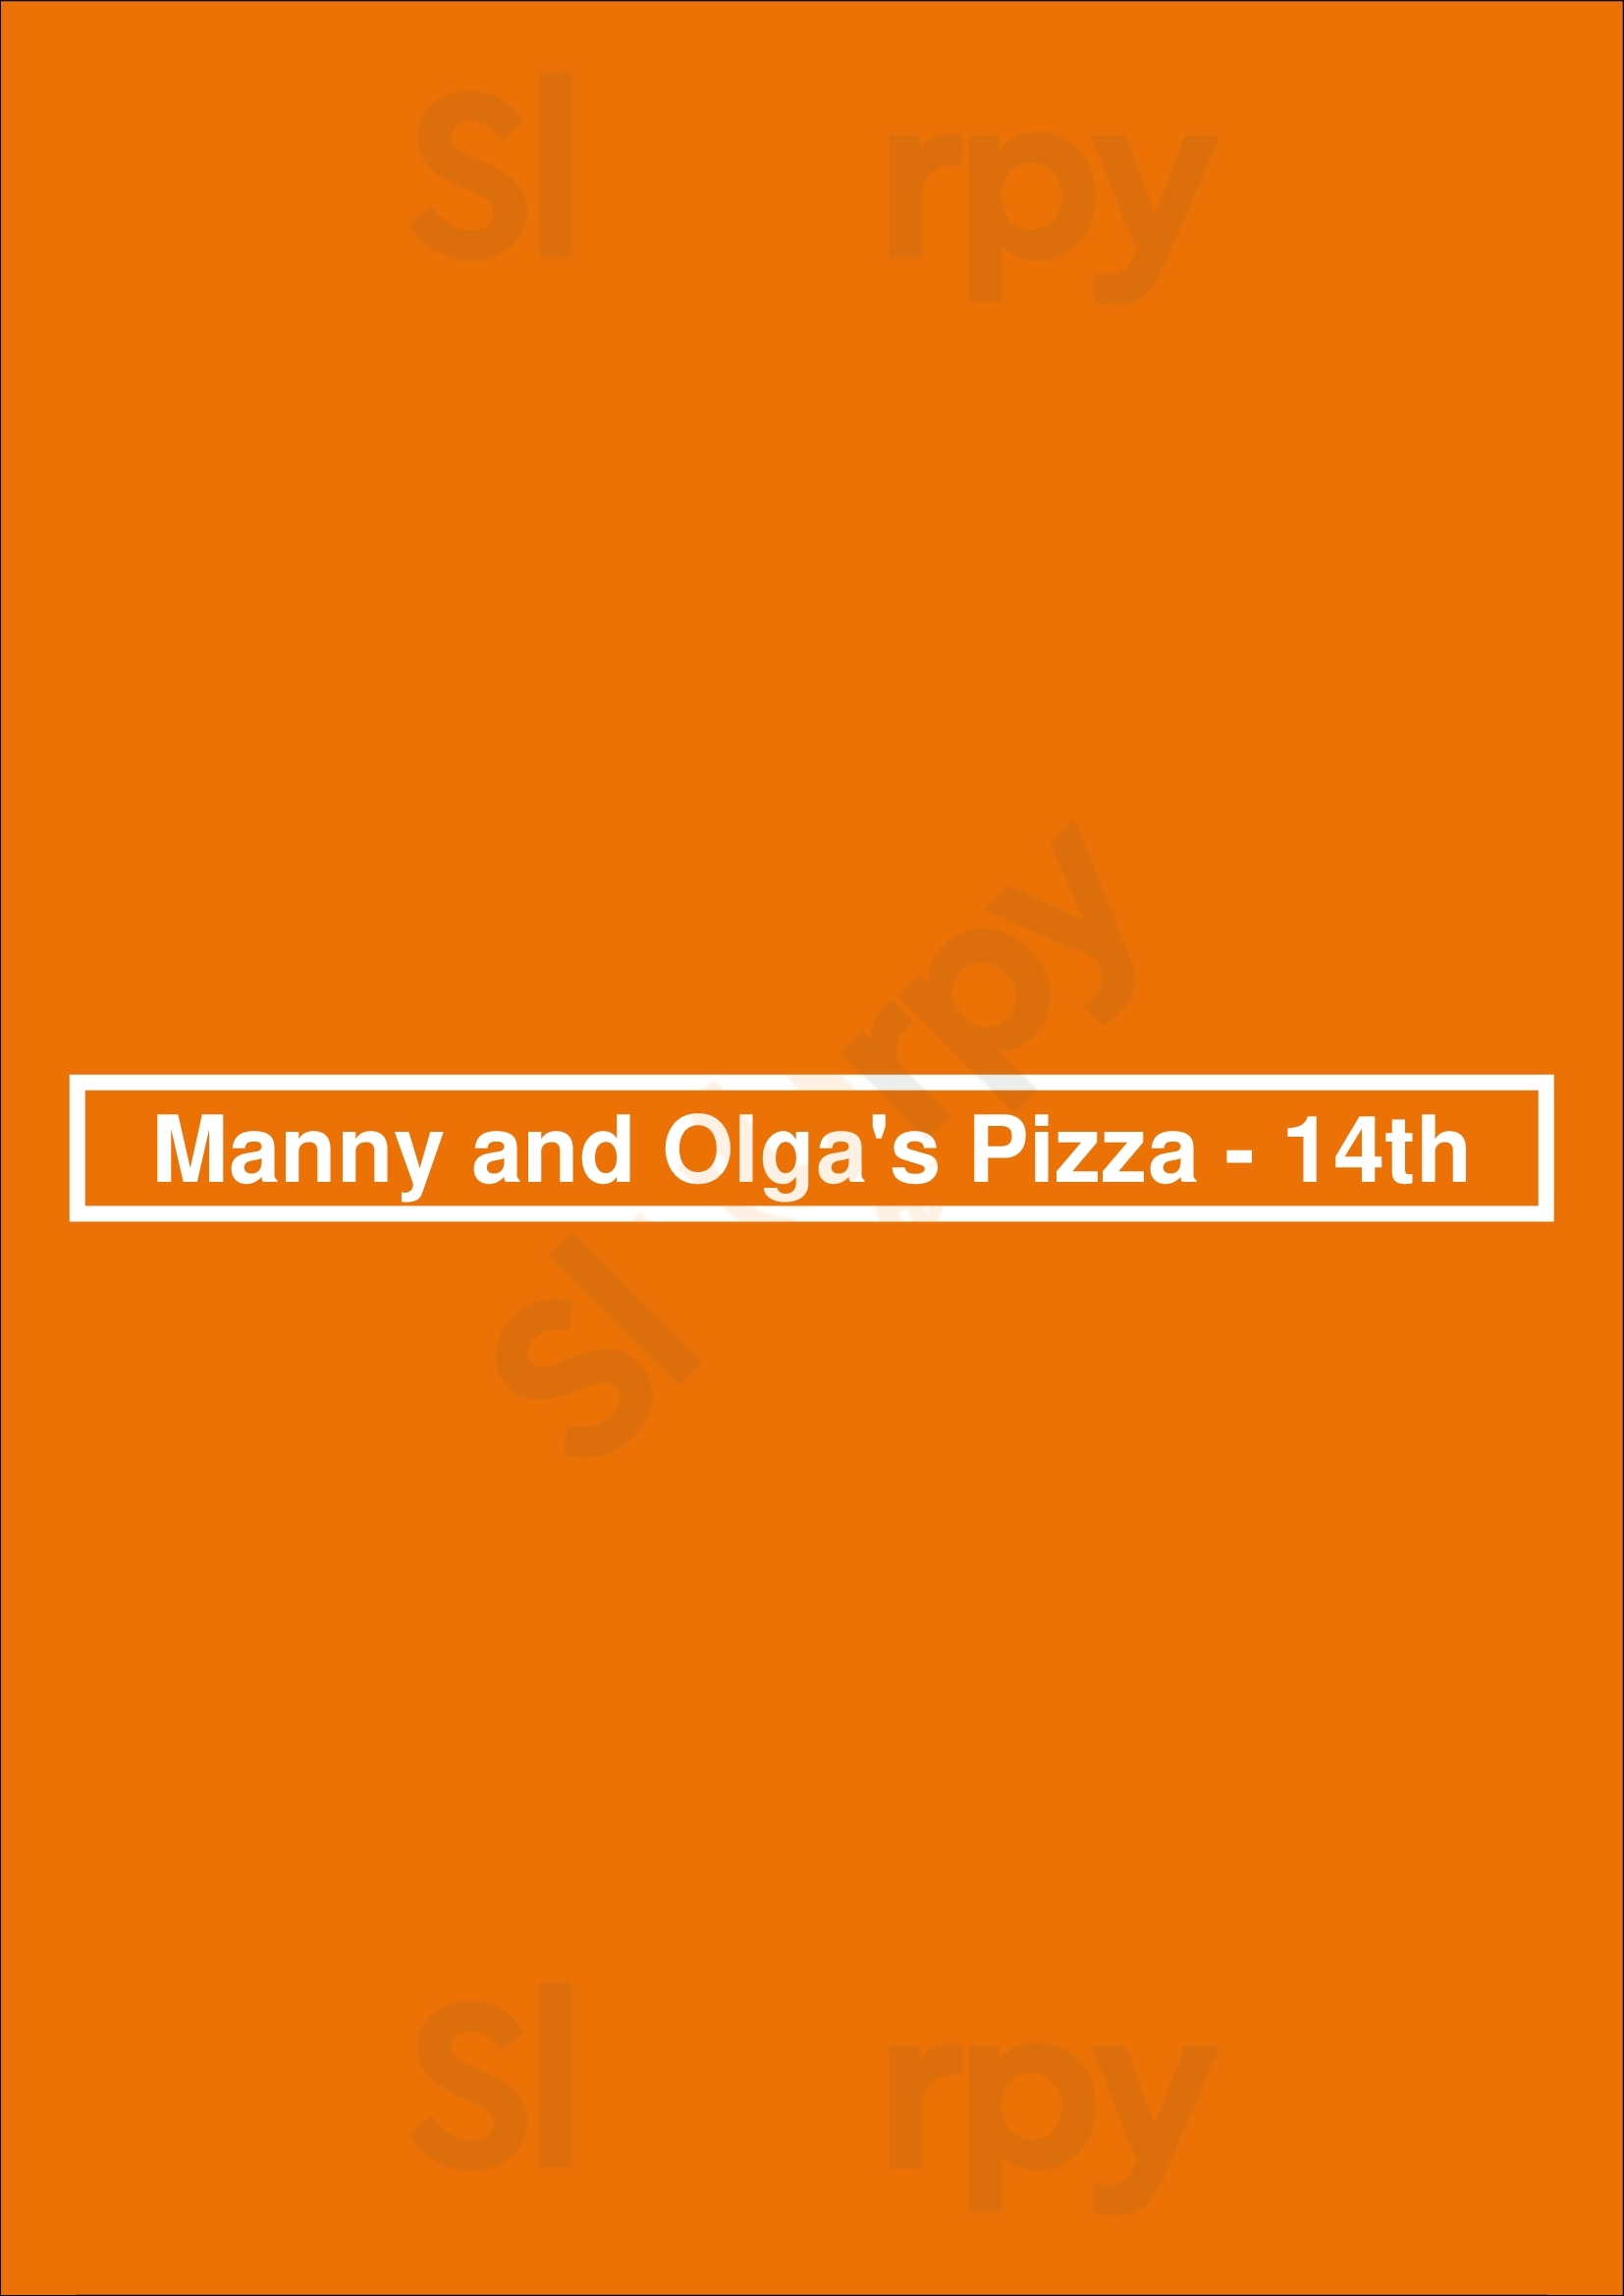 Manny & Olga's Pizza Washington DC Menu - 1